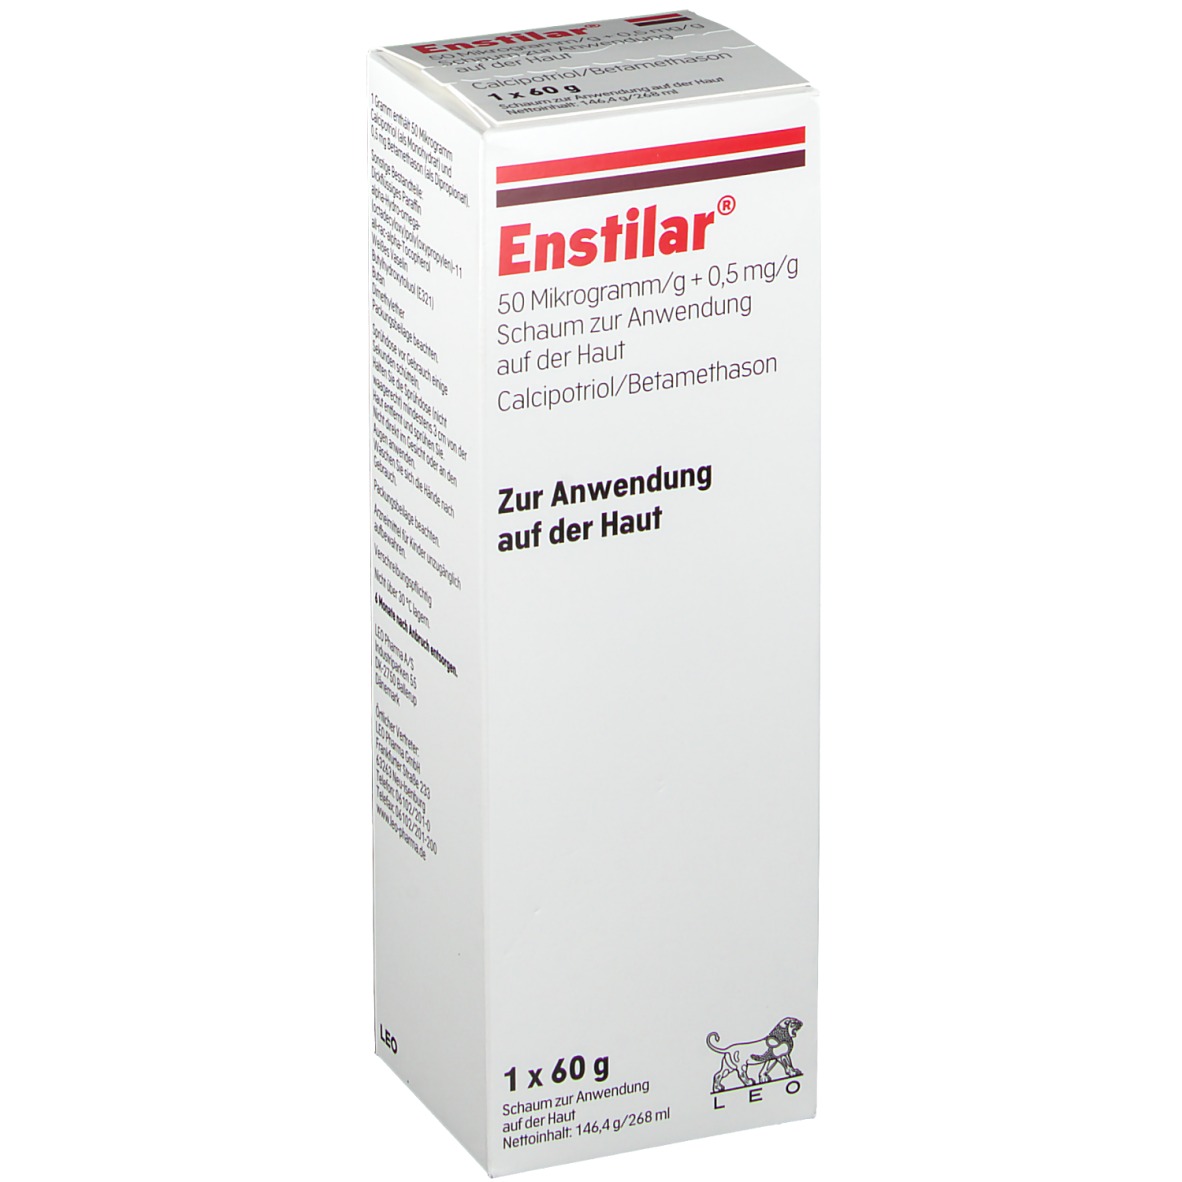 Enstilar : Uses, Side Effects, Interactions, Dosage / Pillintrip